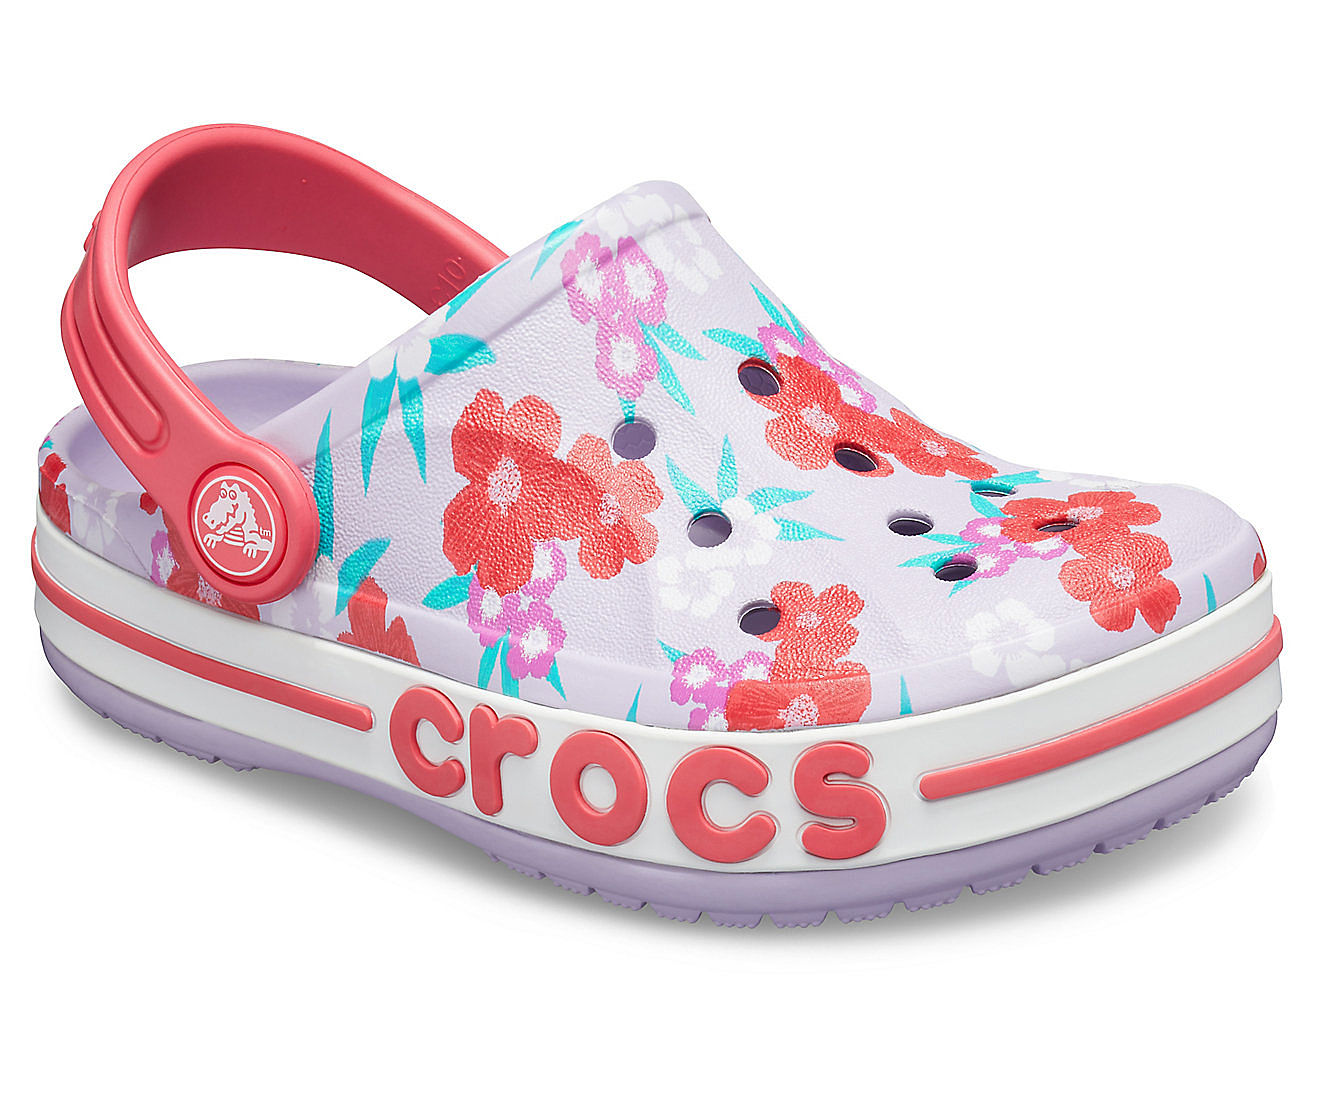 crocs $20